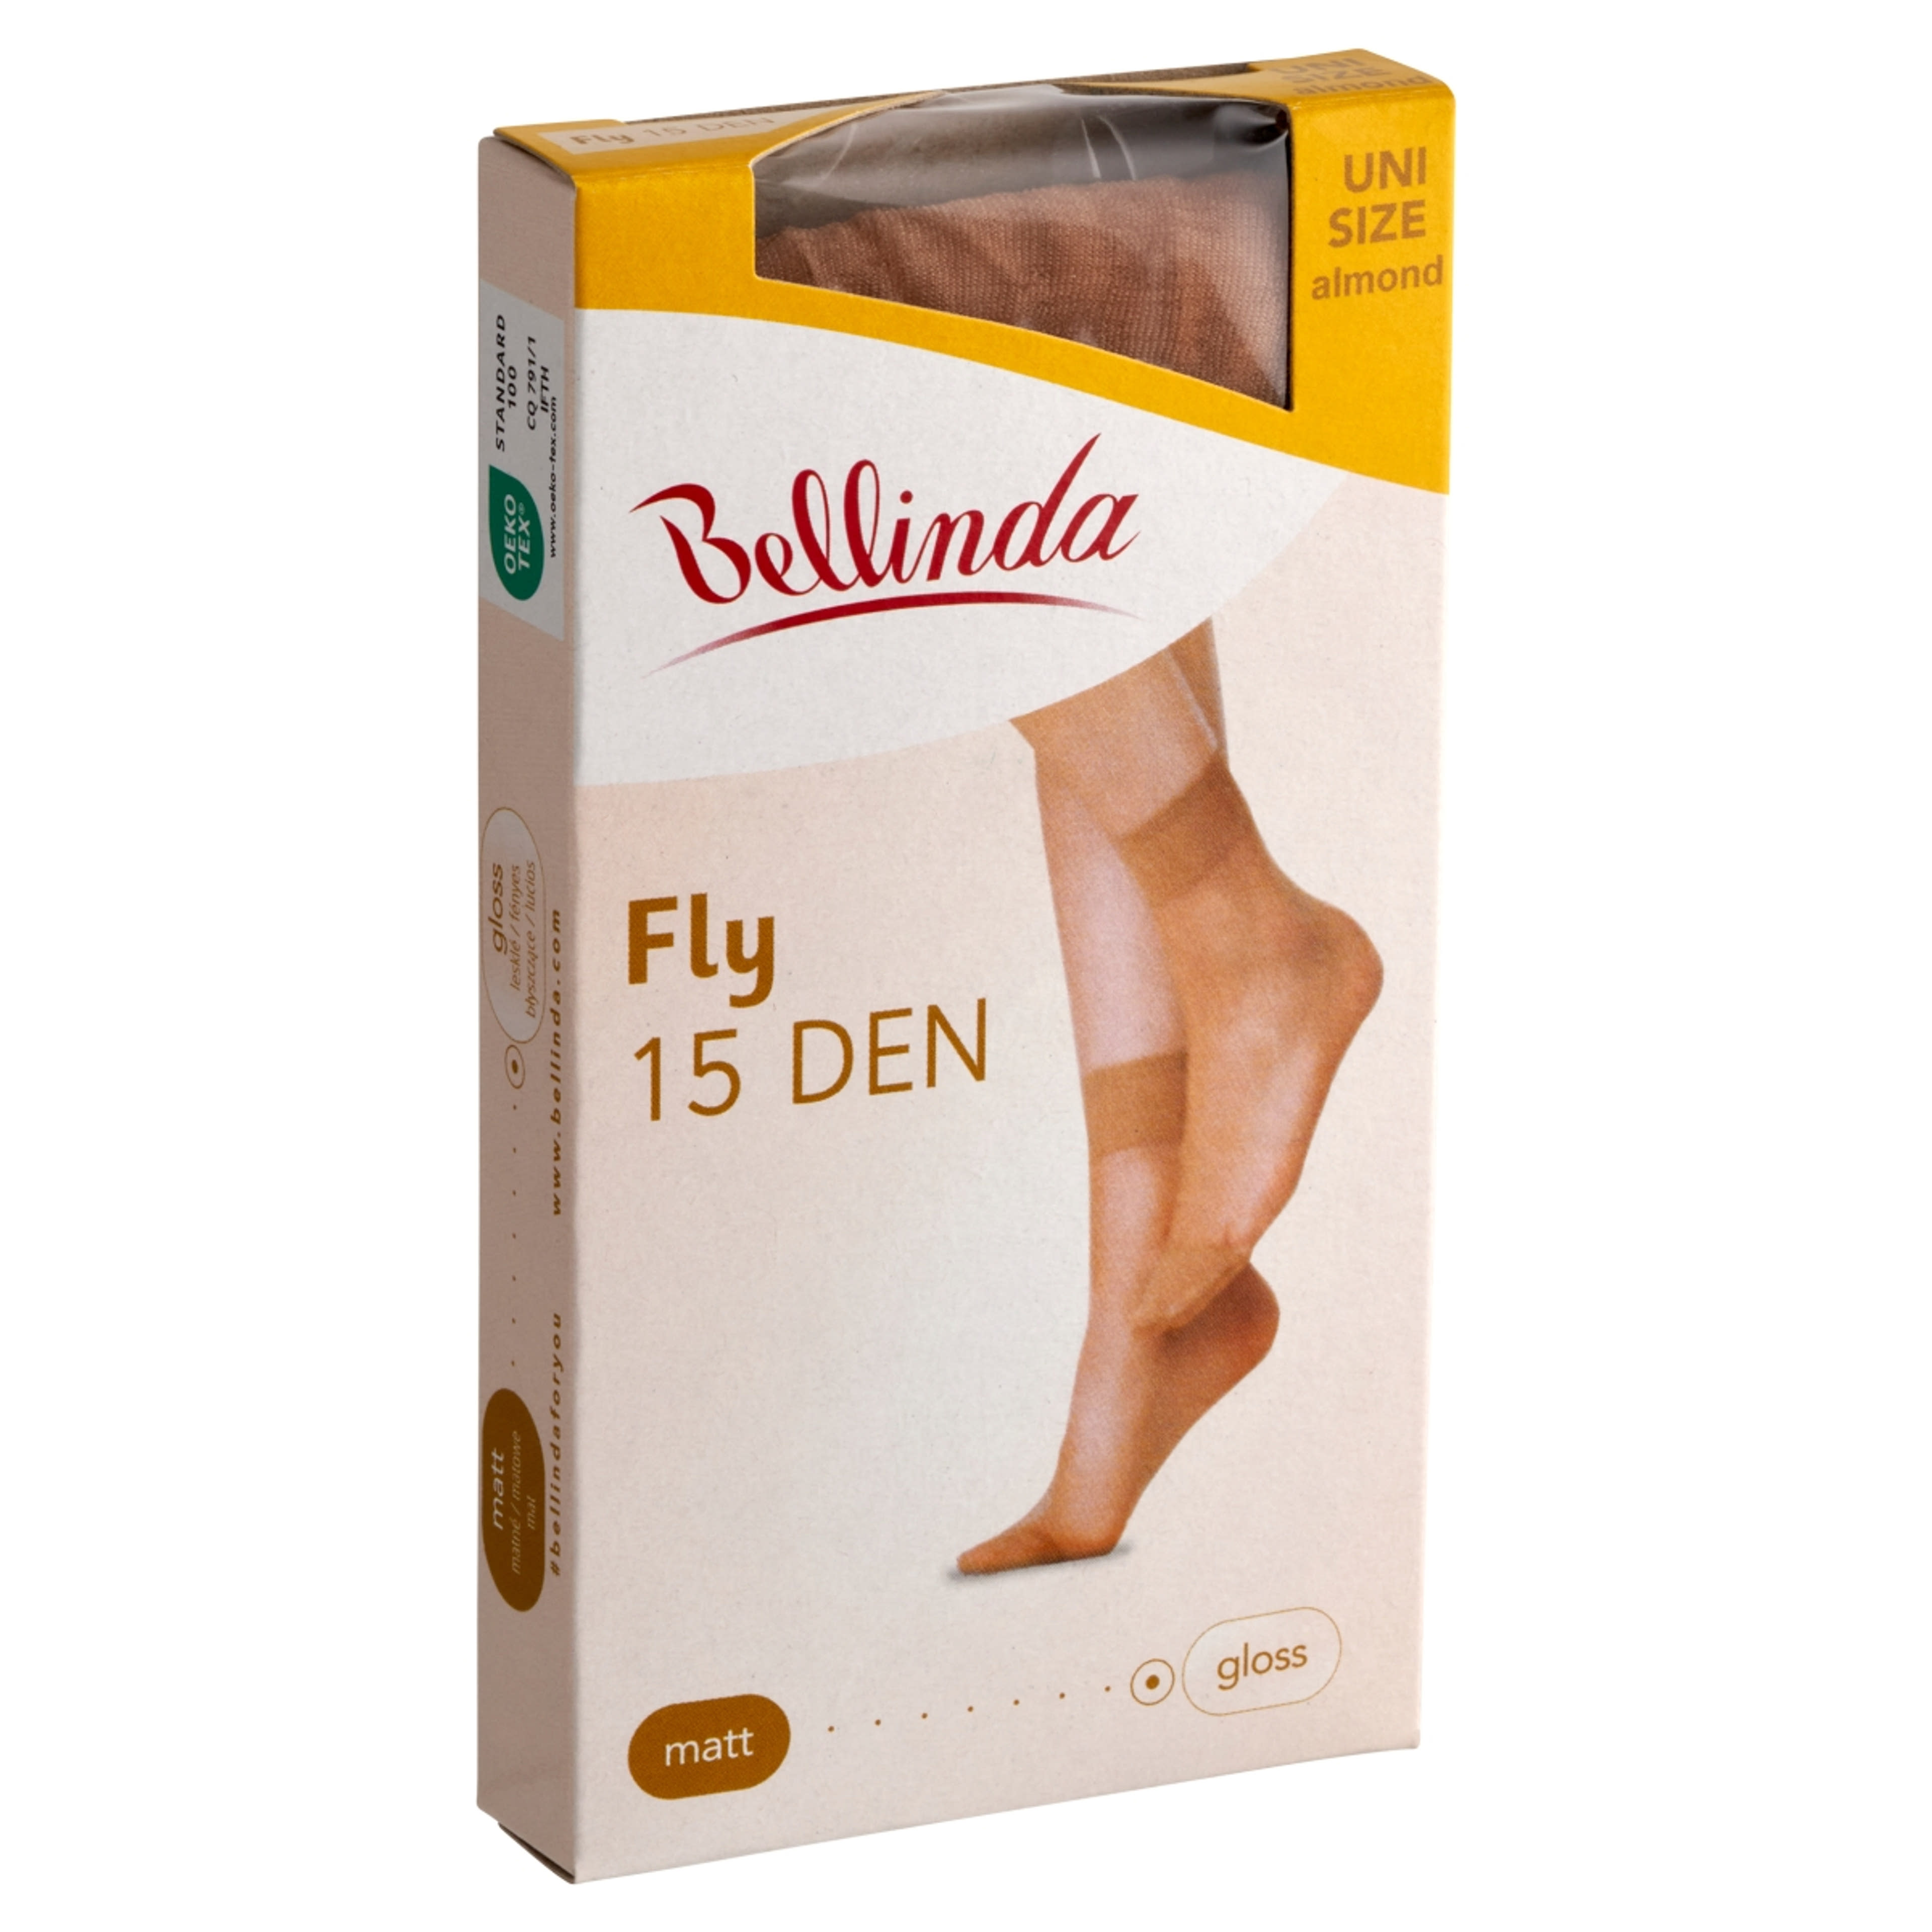 Bellinda Fly 15 bokafix, almond, unisex - 1 db-2